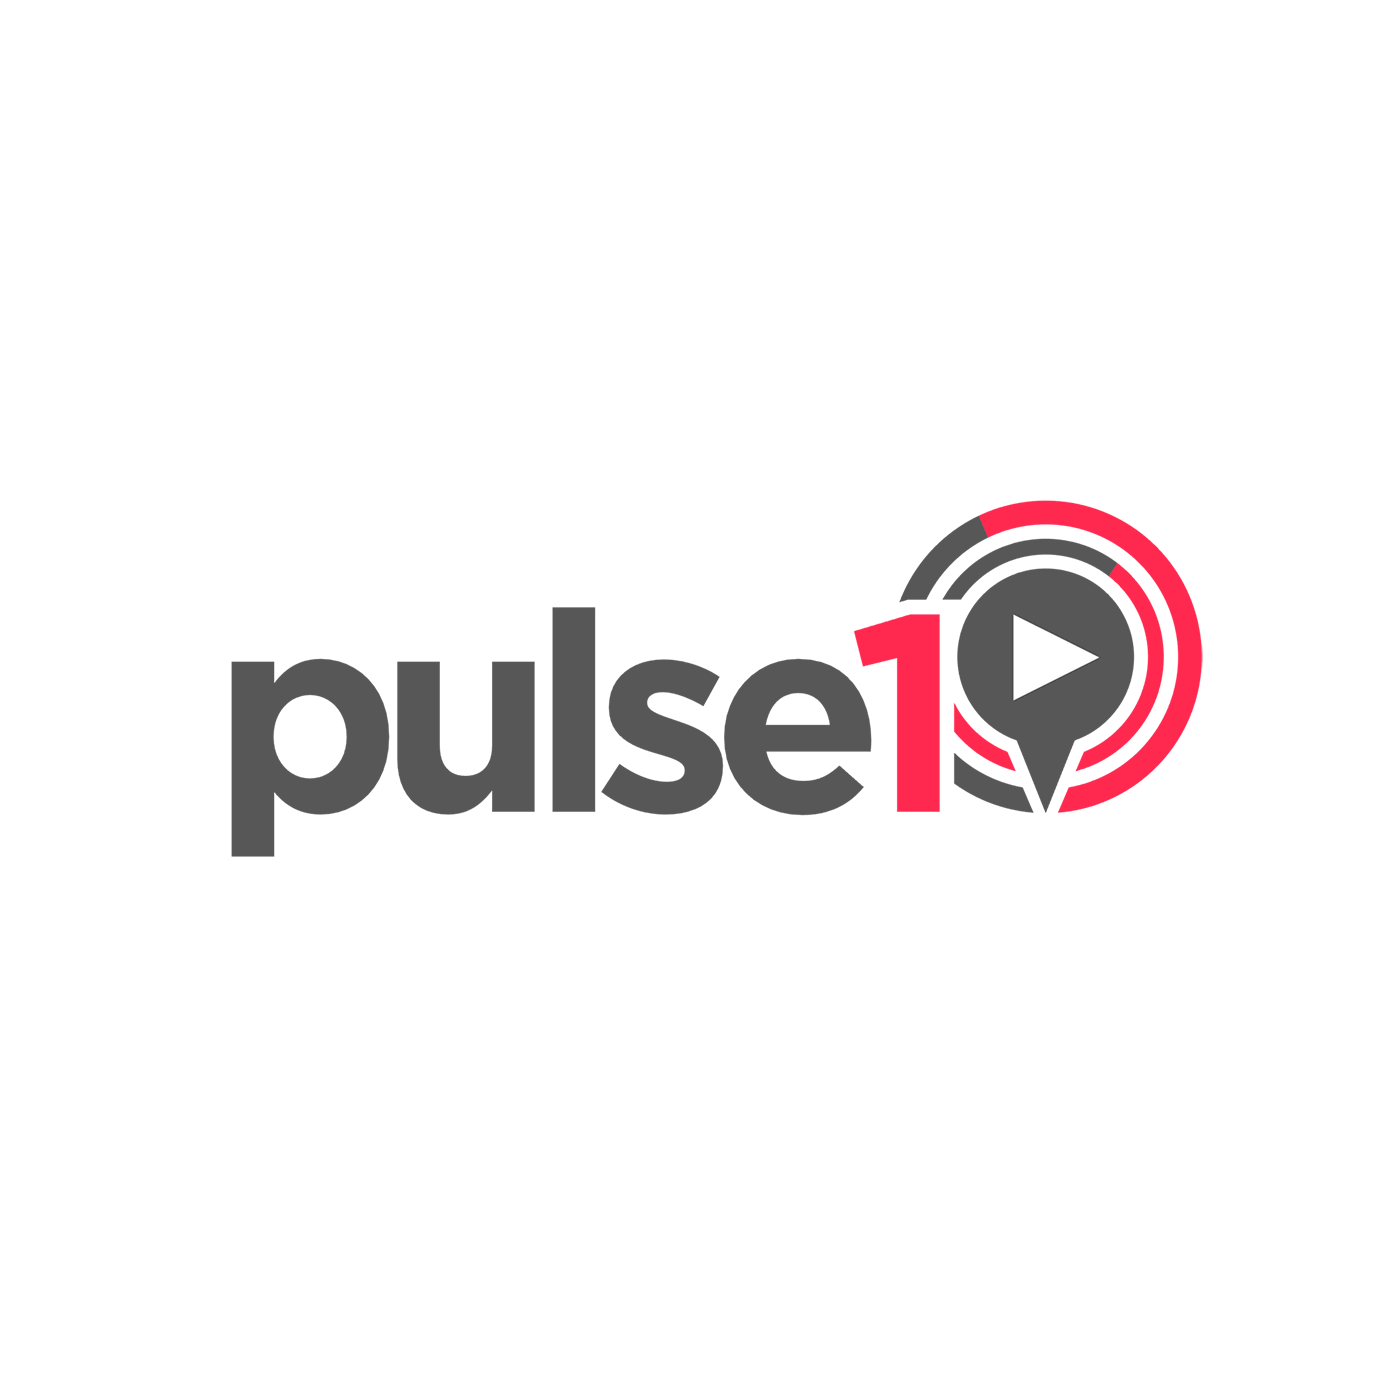 Pulse1